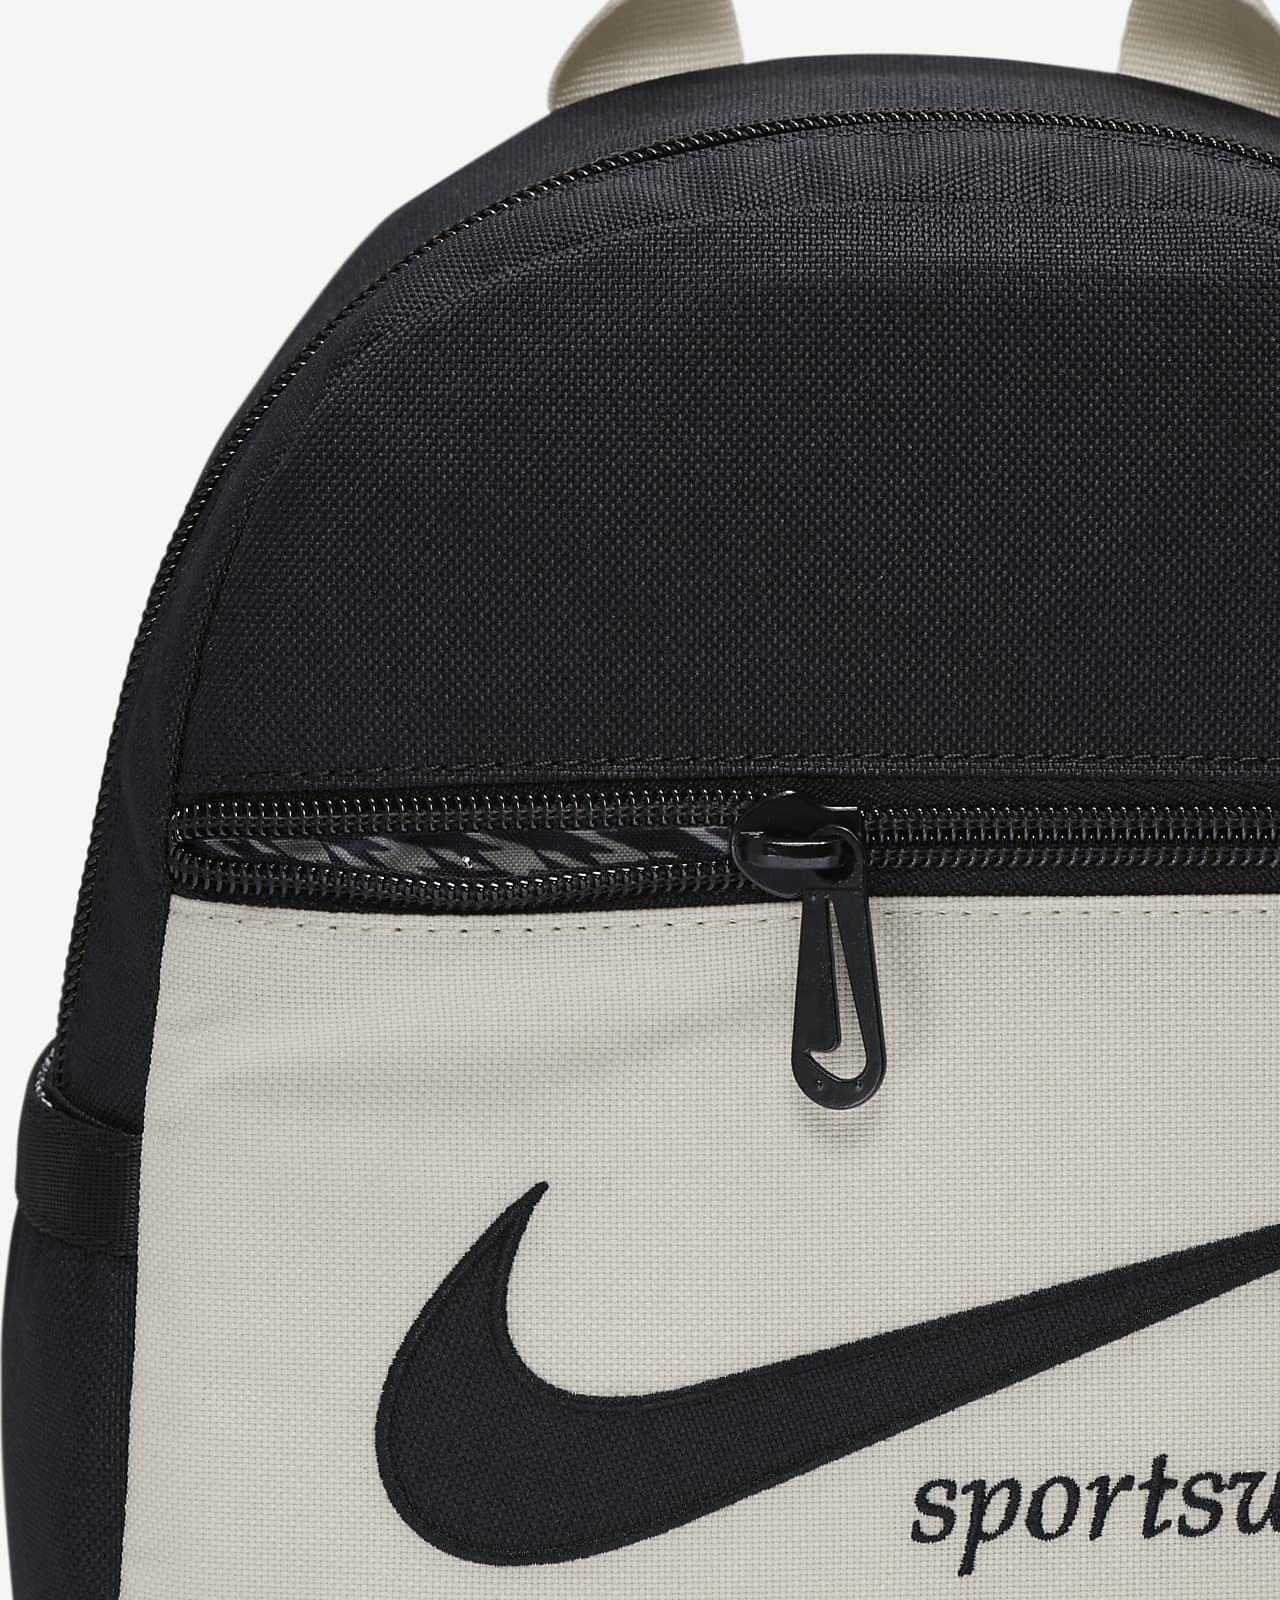 Women's Nike Sportswear Futura Luxe Mini Backpack